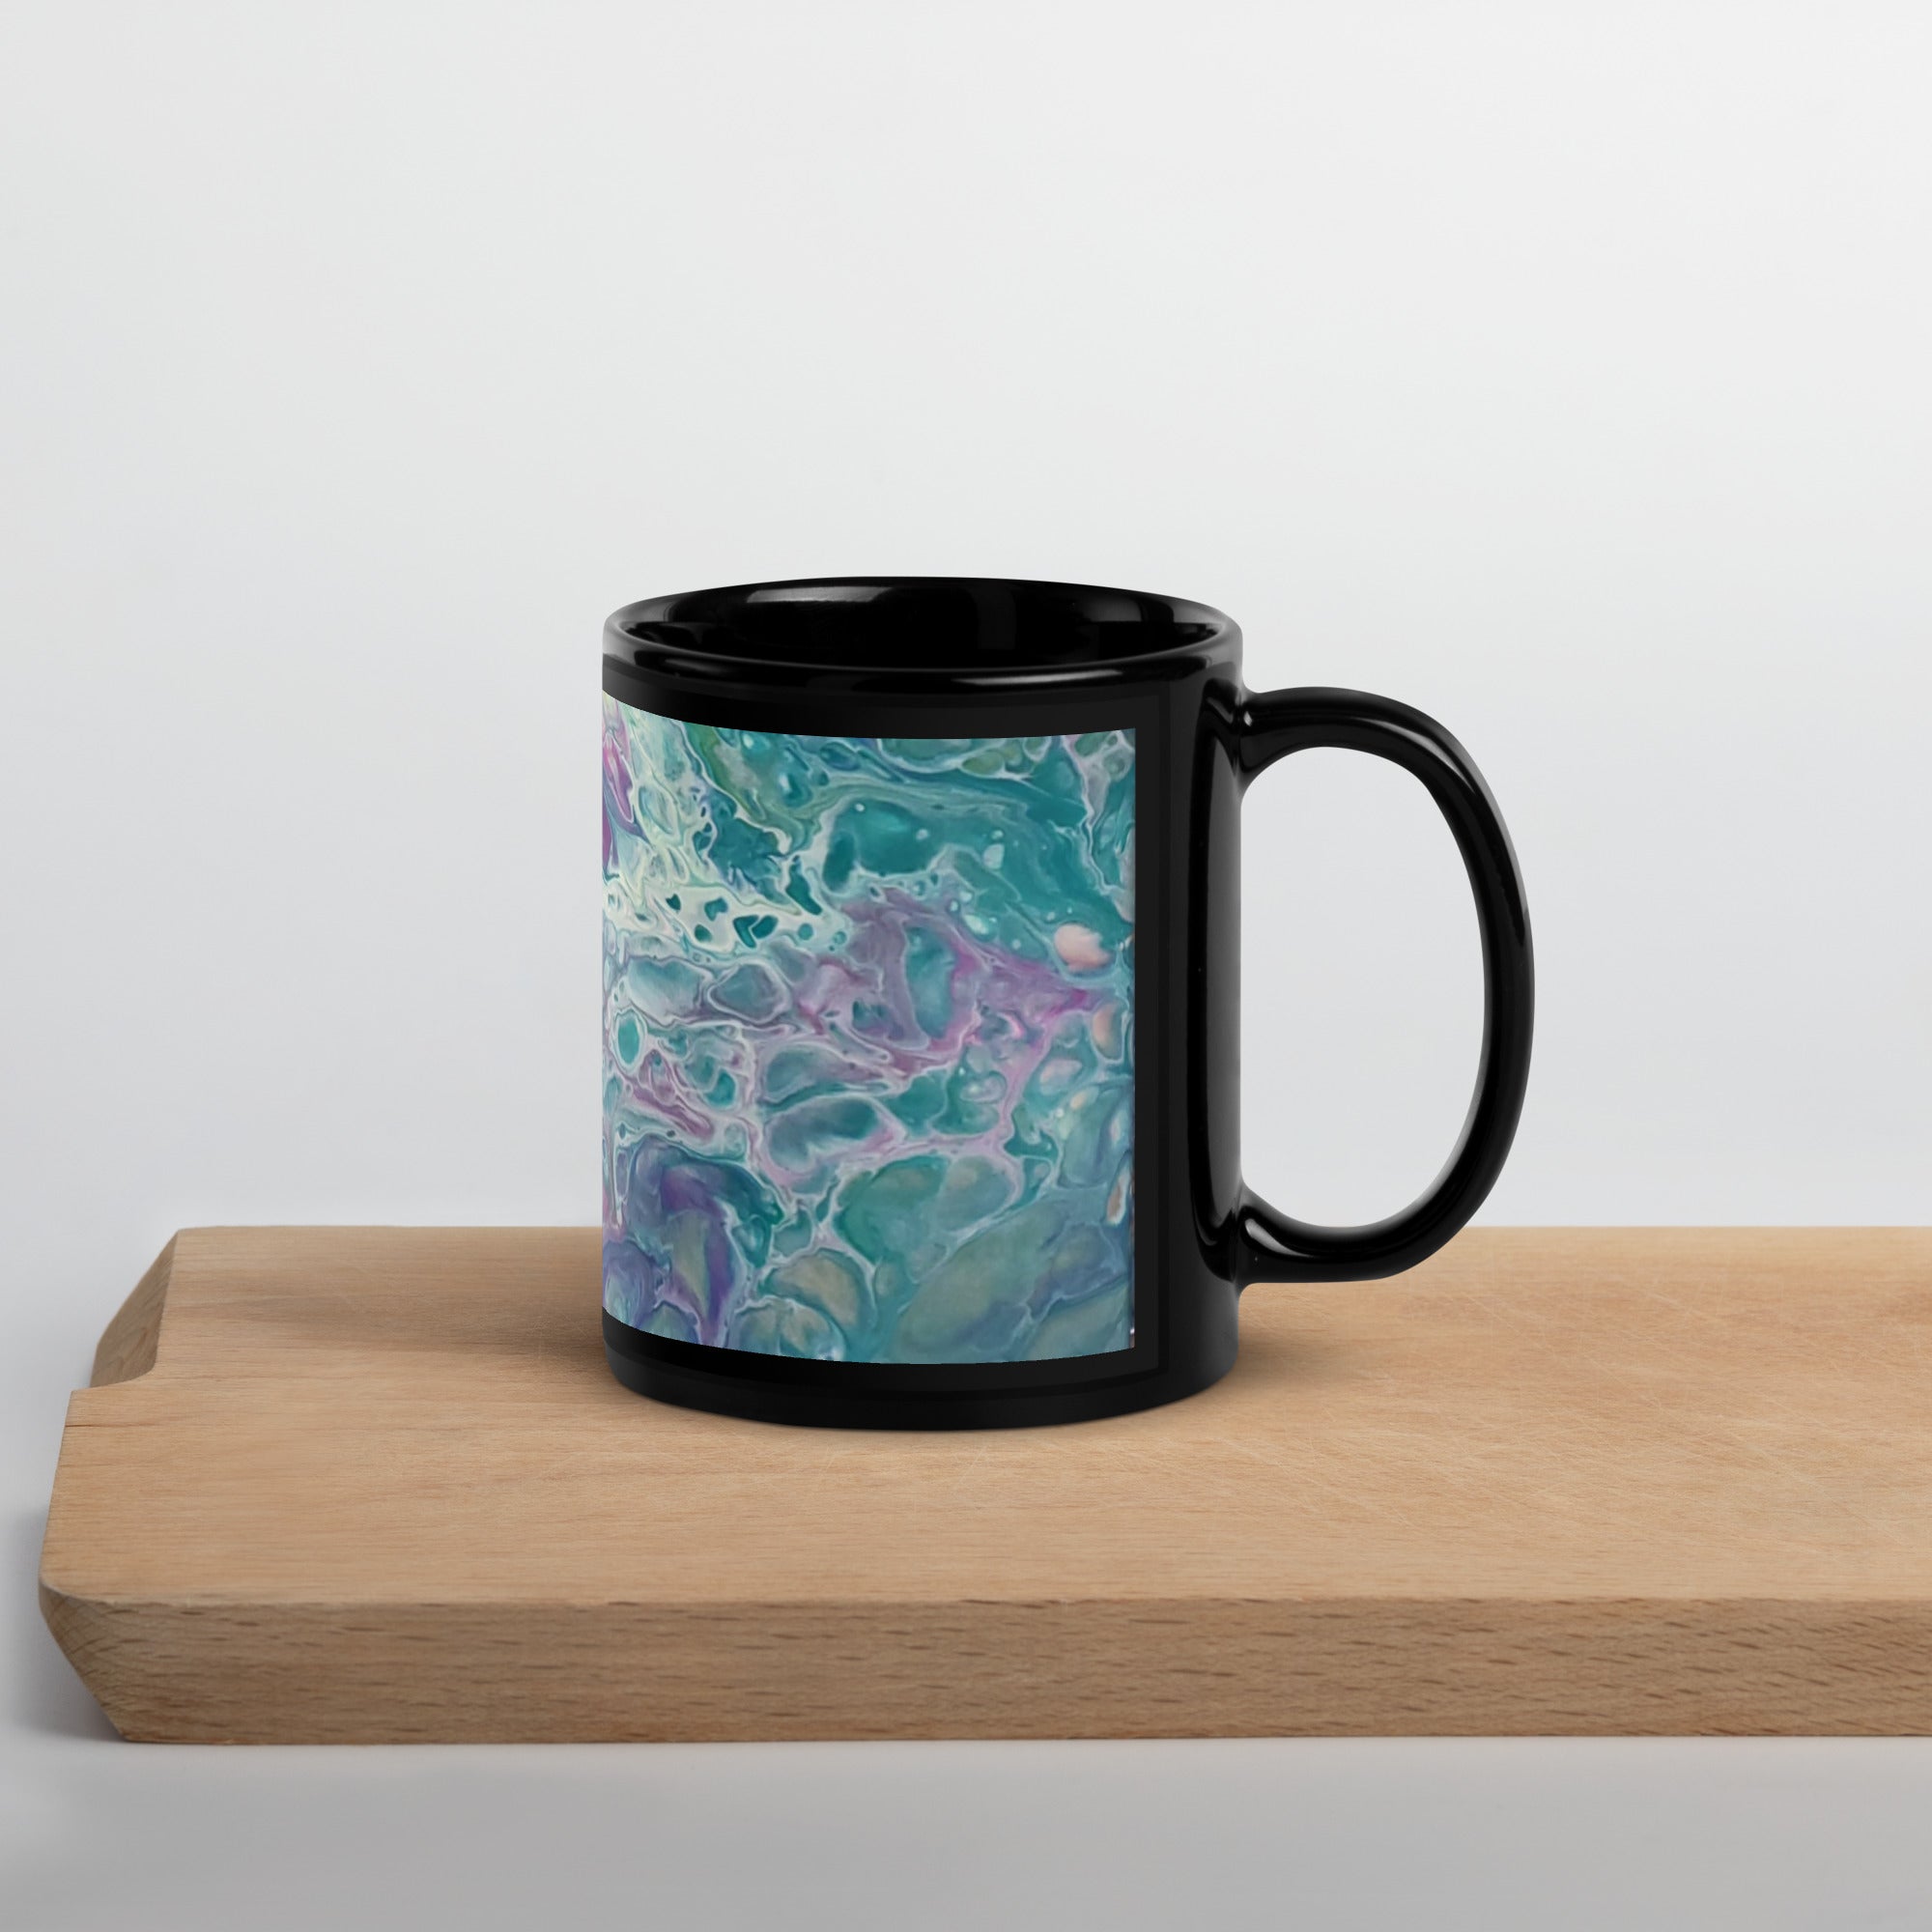 Ocean Life Ceramic Mug, Glossy Mug, Fluid Art, Acrylic Pour Painting, Abstract Art, Gift, Paint Mug, Coffee Cup, Drinkware Black